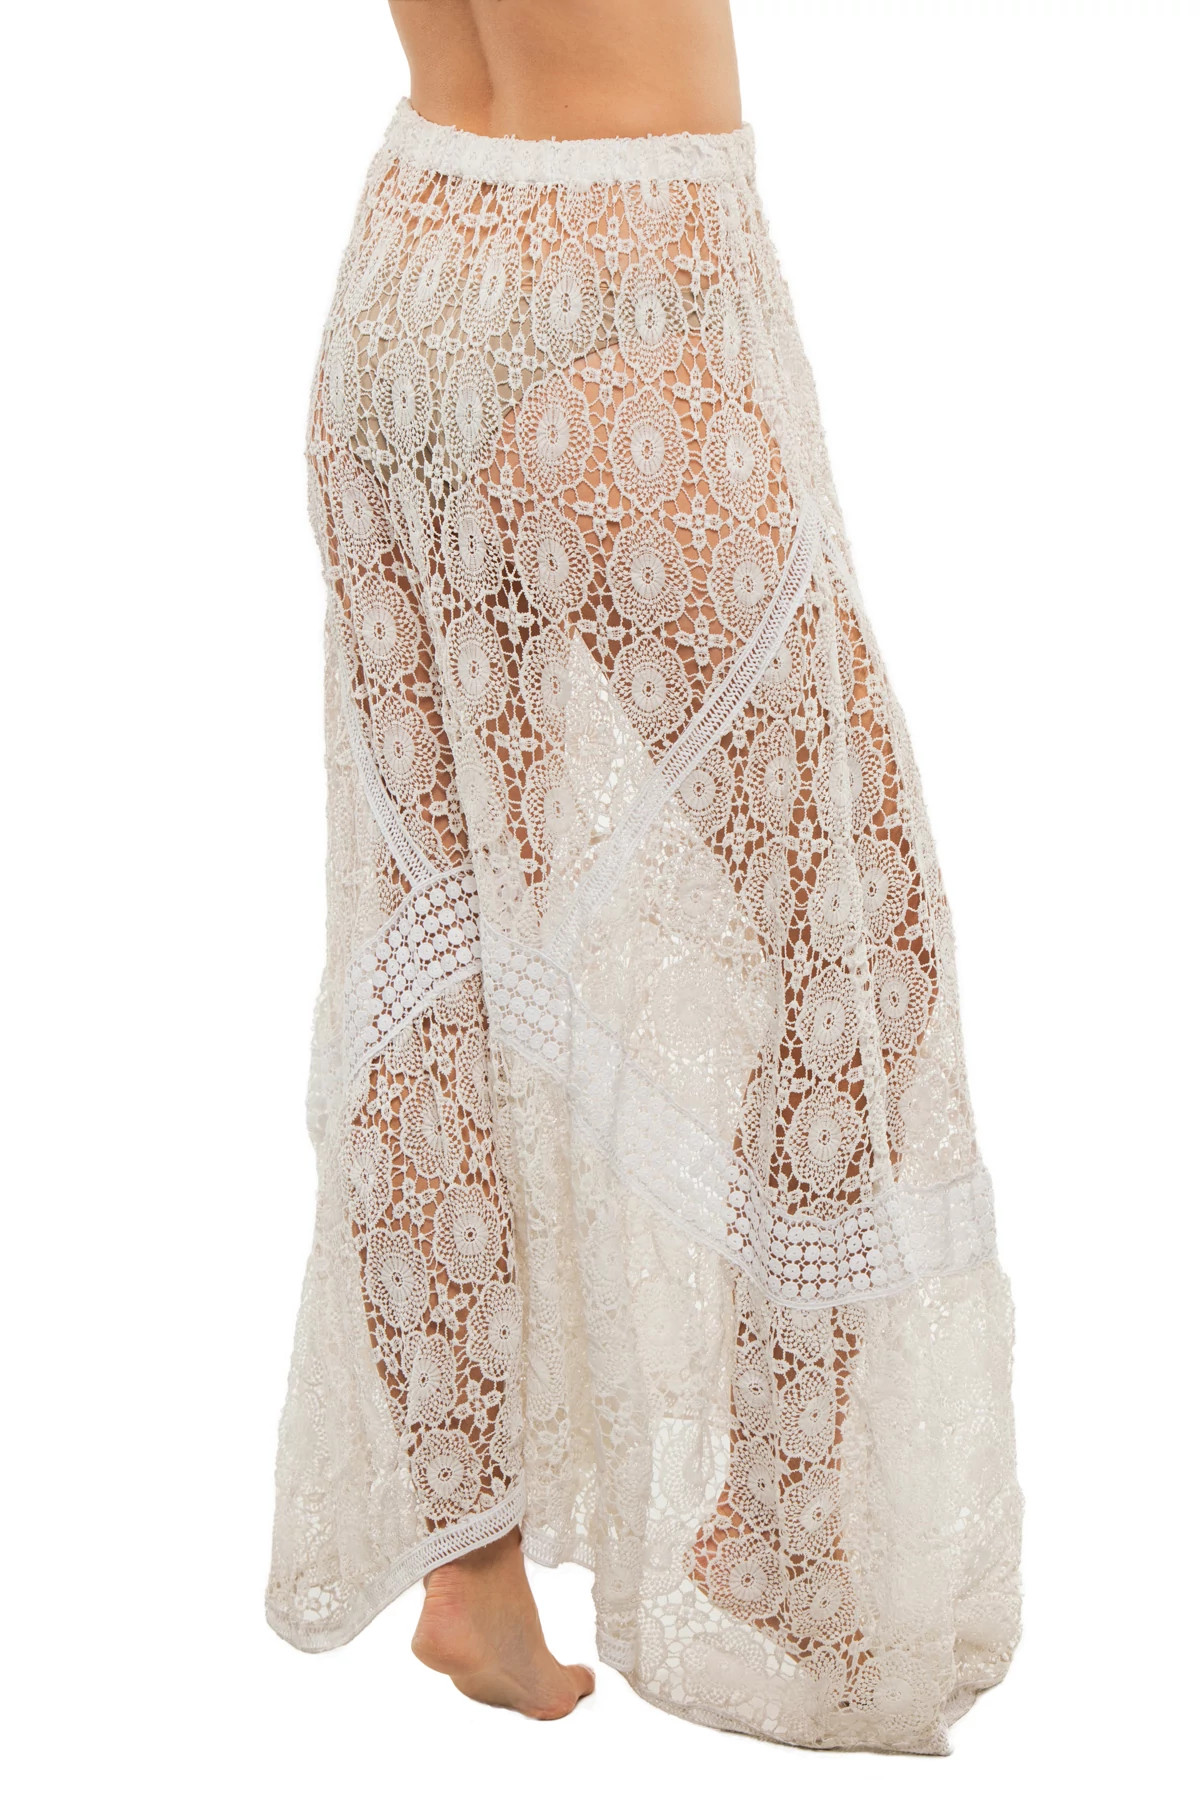 WHITE PRINTED LACE Dalia Lace Maxi Skirt image number 2